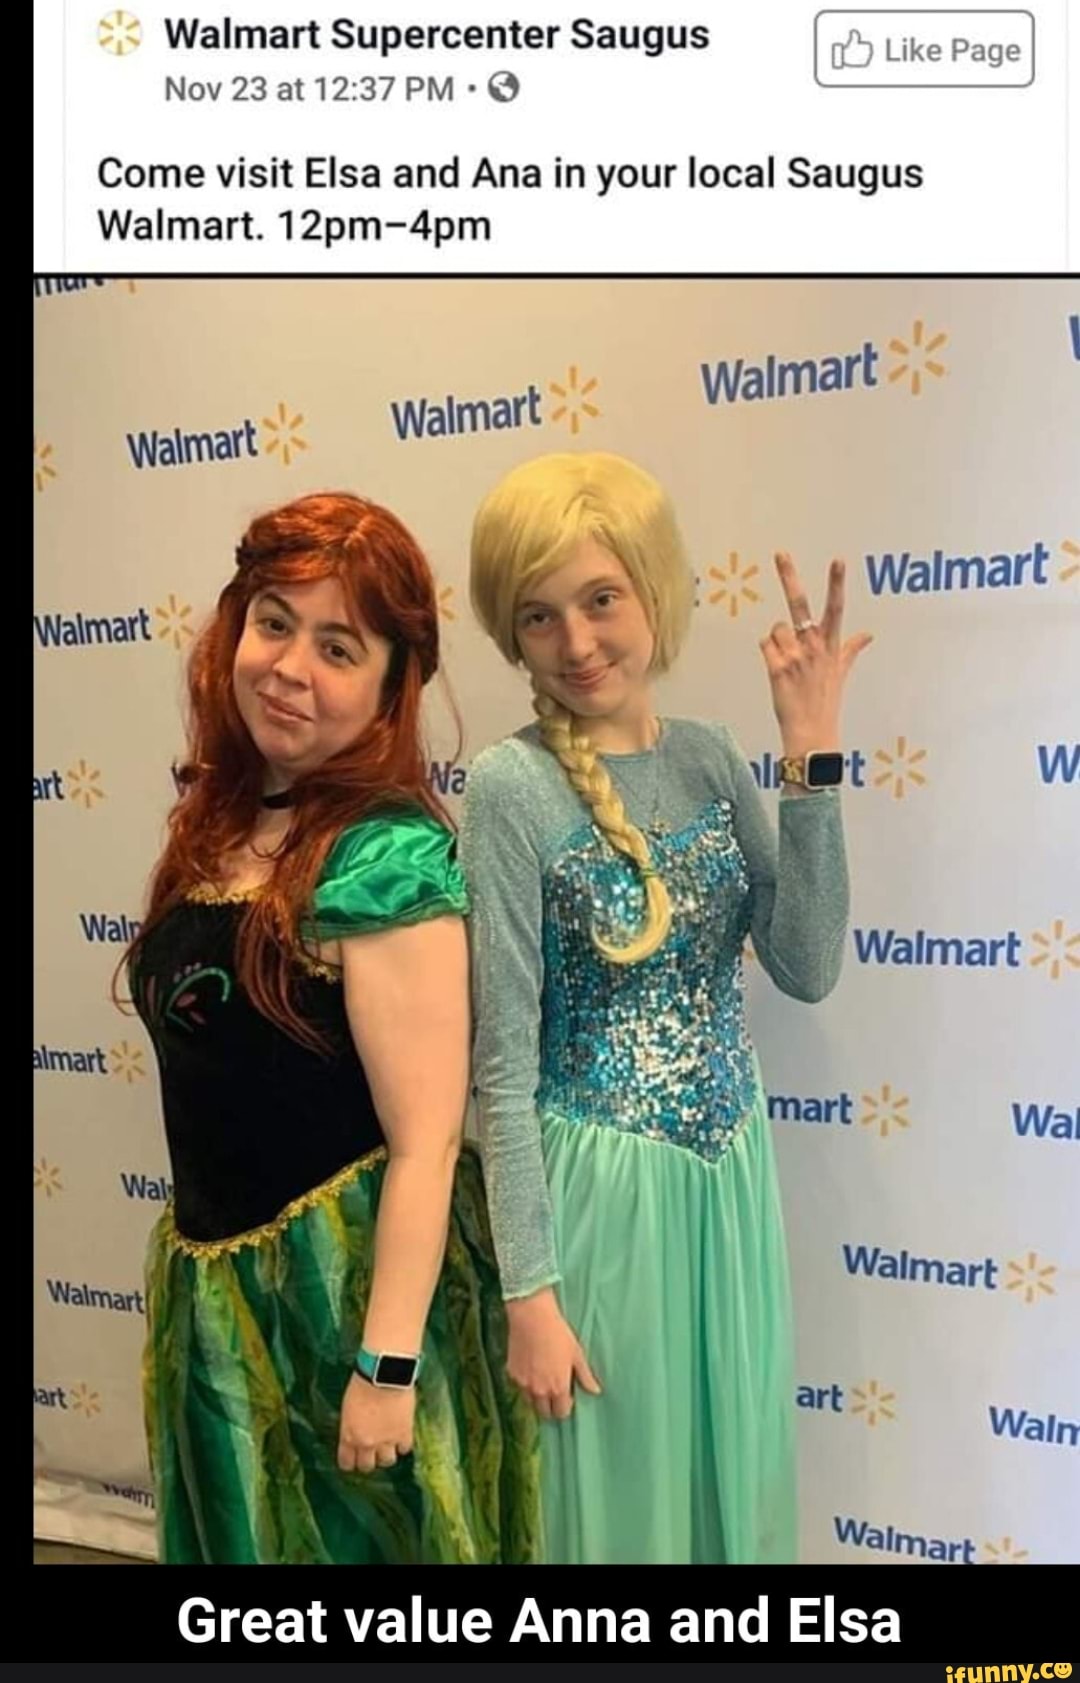 Walmart Supercenter Saugus Nov 23 at PM: @ Come visit Elsa and Ana